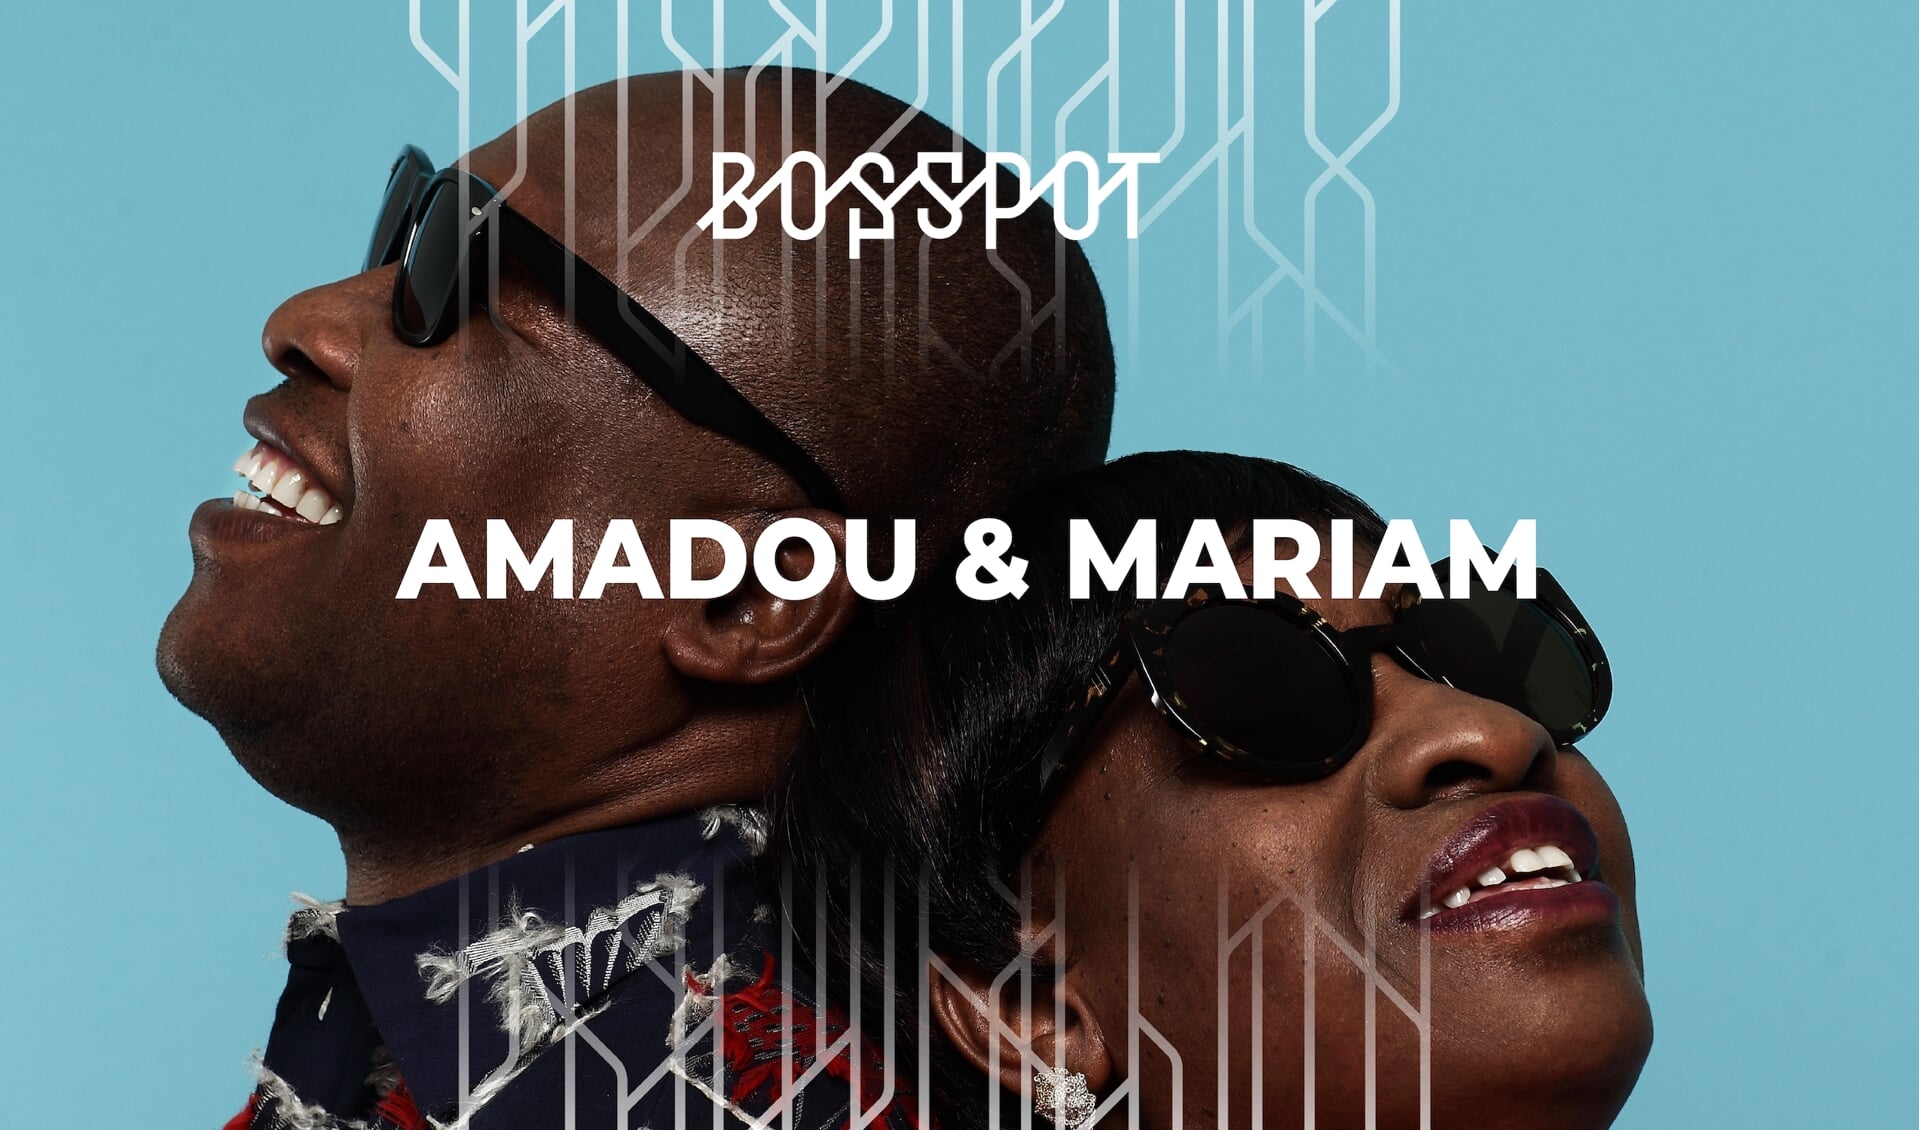 Amadou & Mariam ? Bosspot Amersfoort